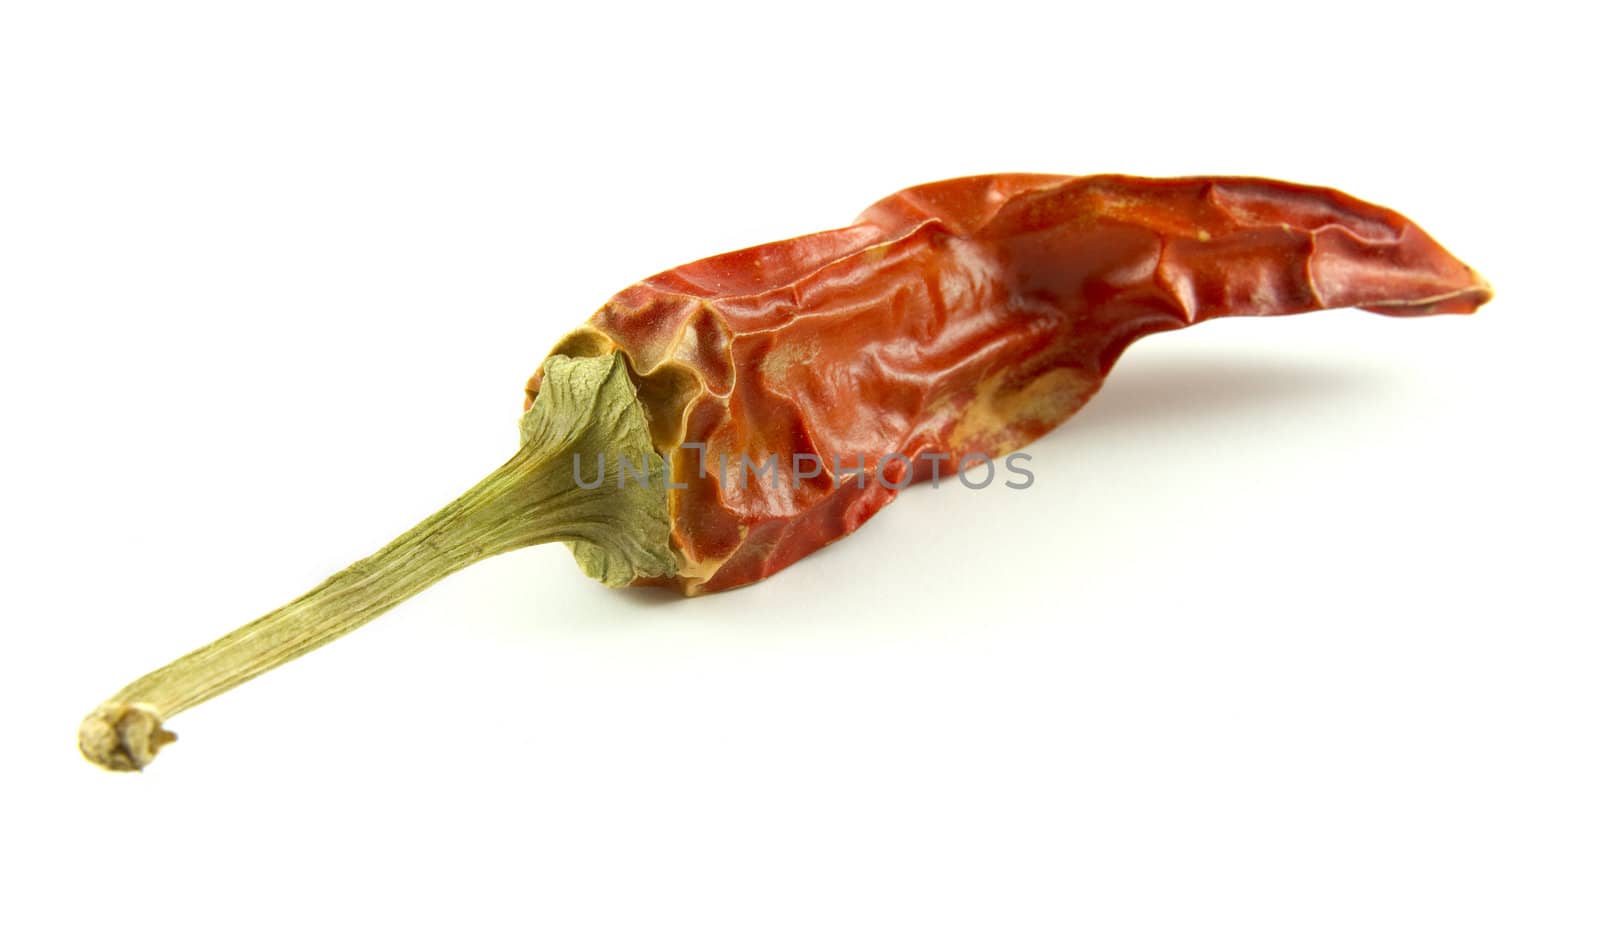 Dry red pepper by Upsidedowncake